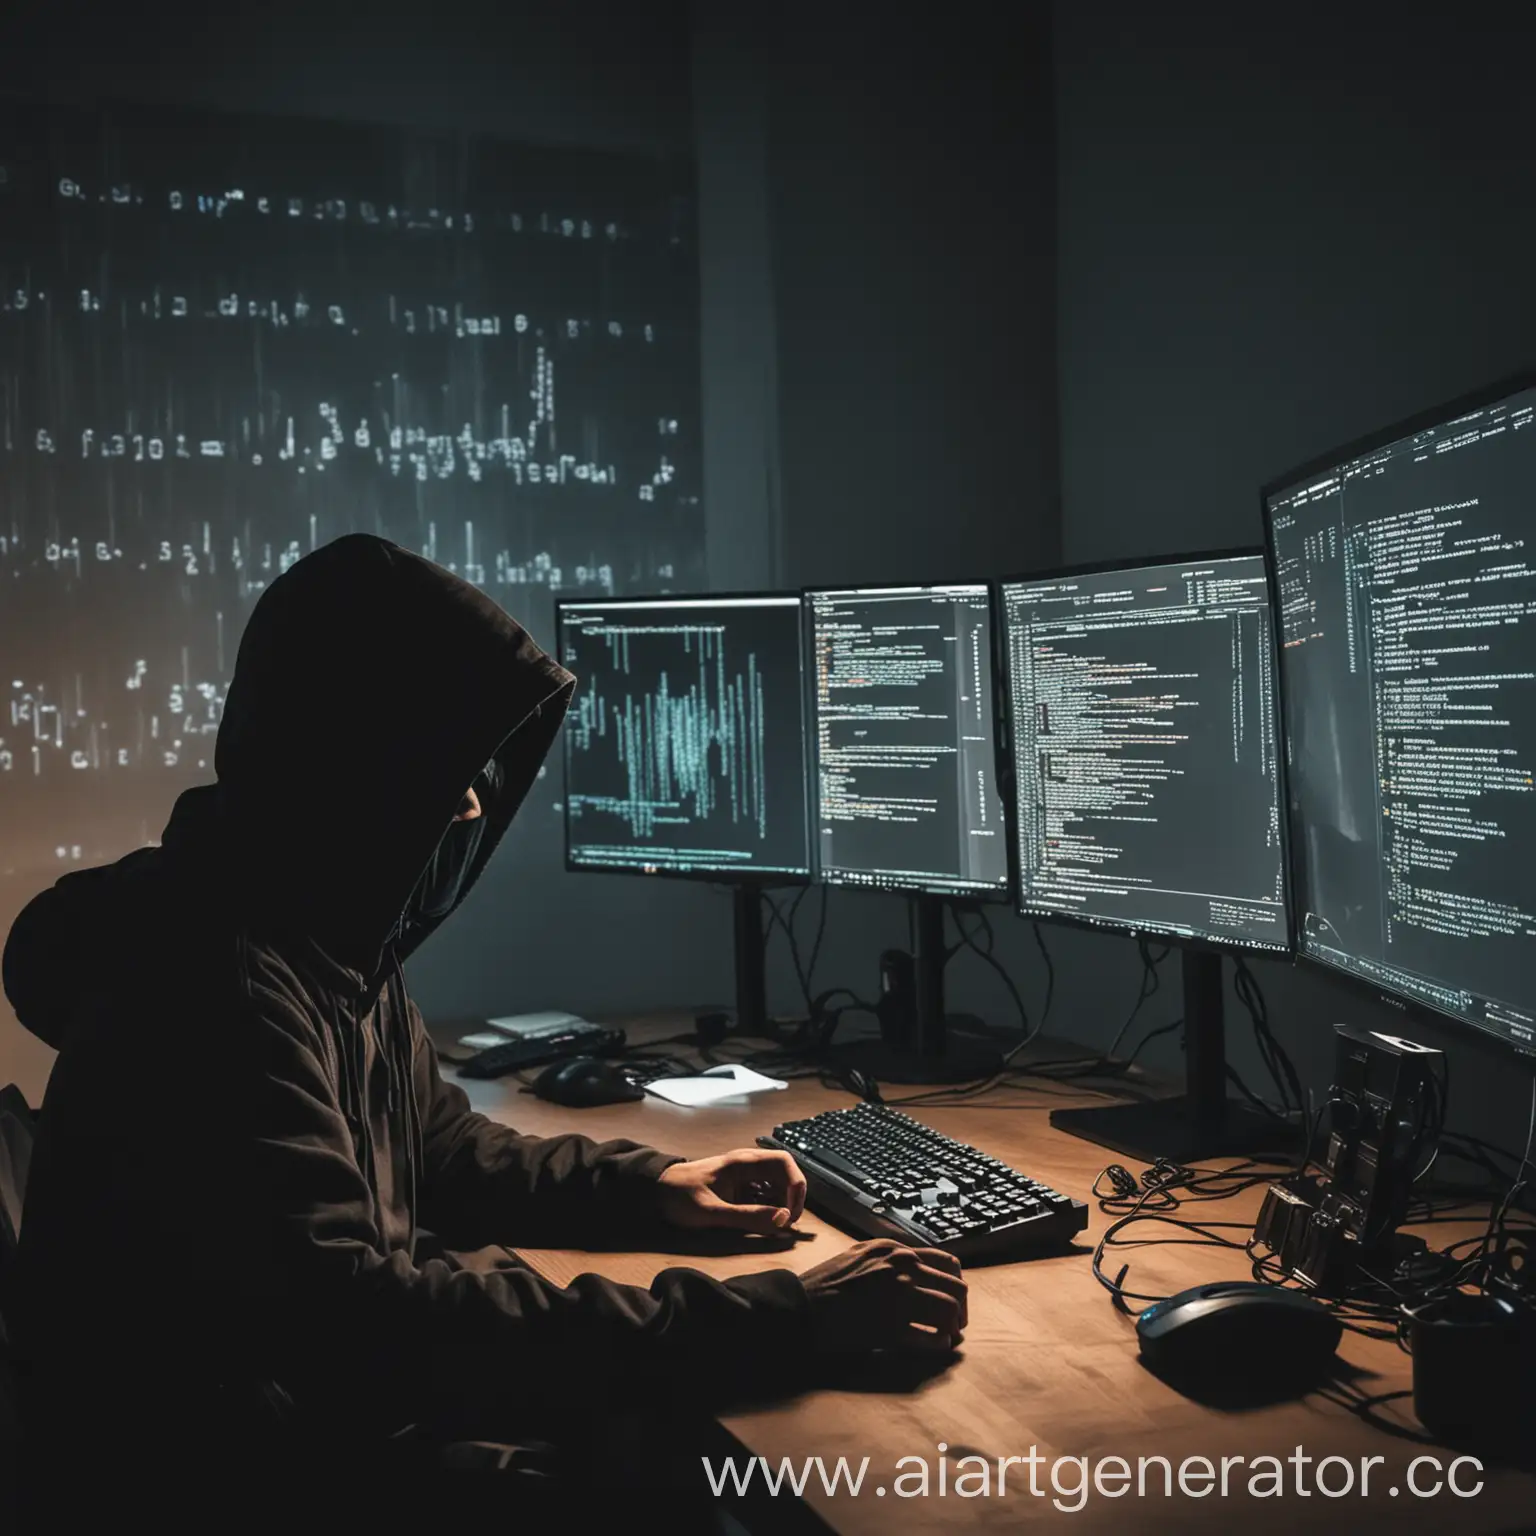 Clandestine-Hackers-Plotting-in-Darkened-Programming-Room